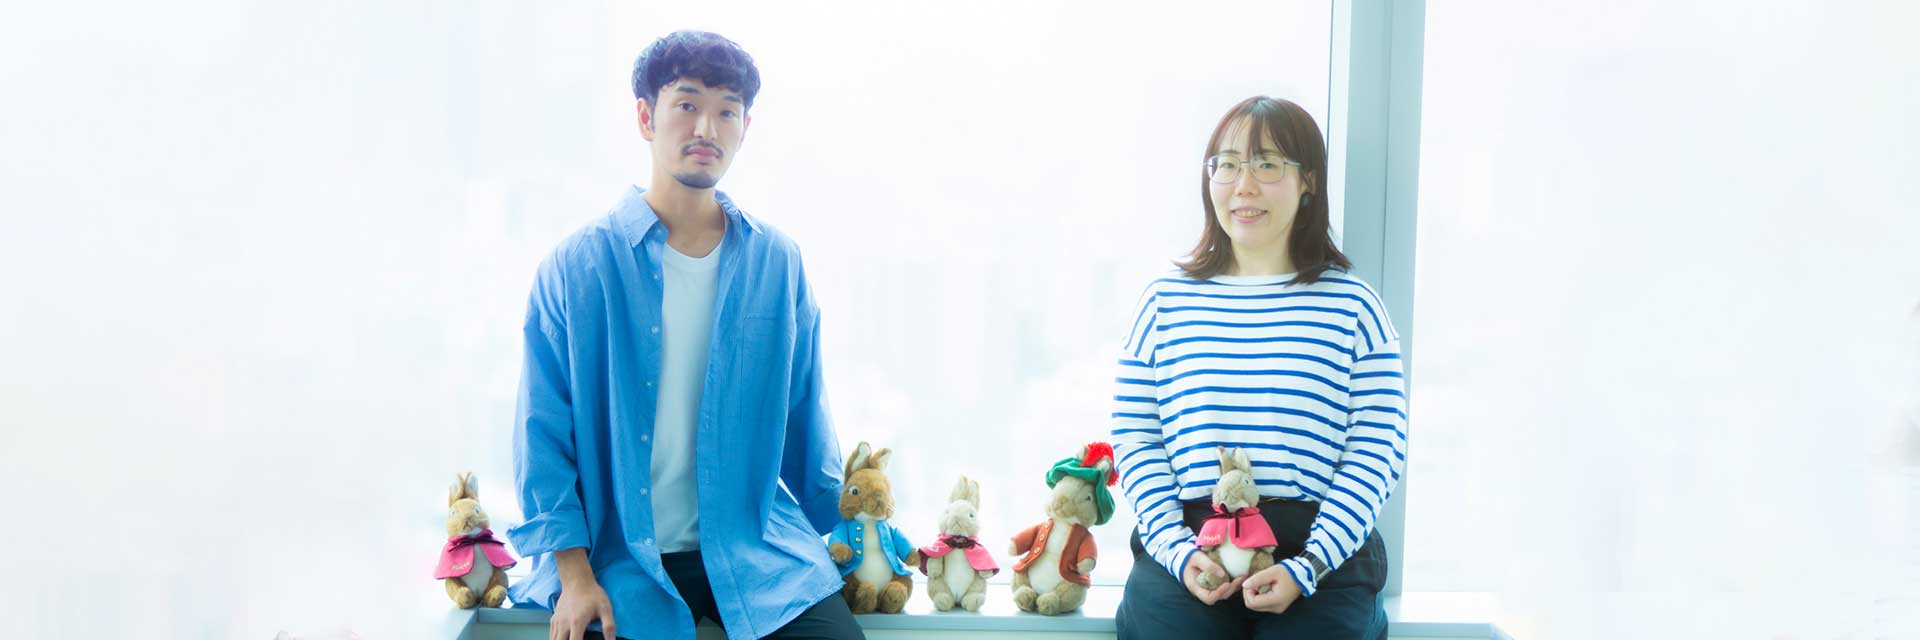 Kenji and Eri in photo with Peter Rabbit stuffed animals